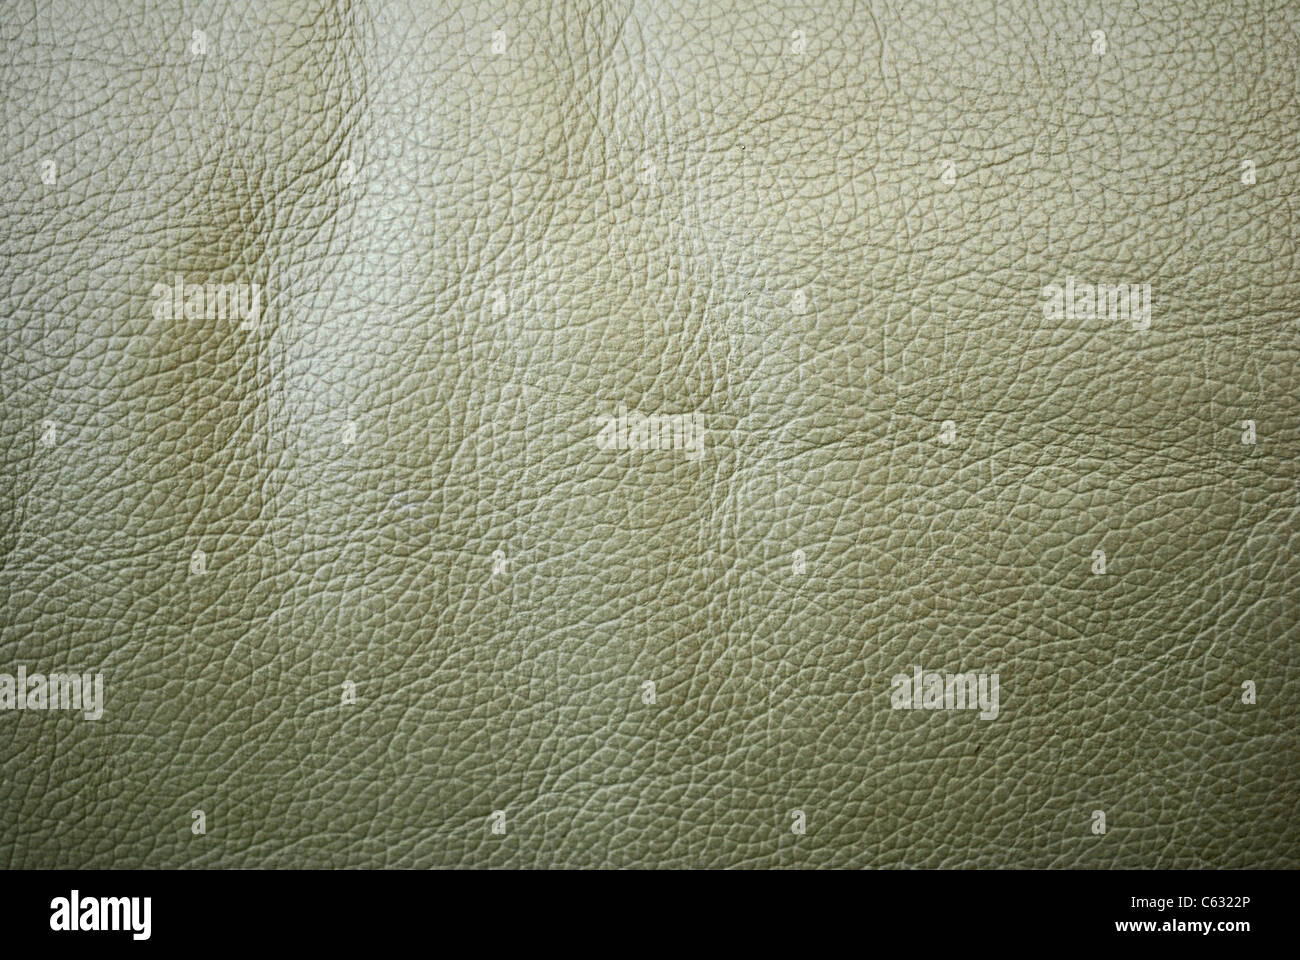 cream leather fabric textures Stock Photo